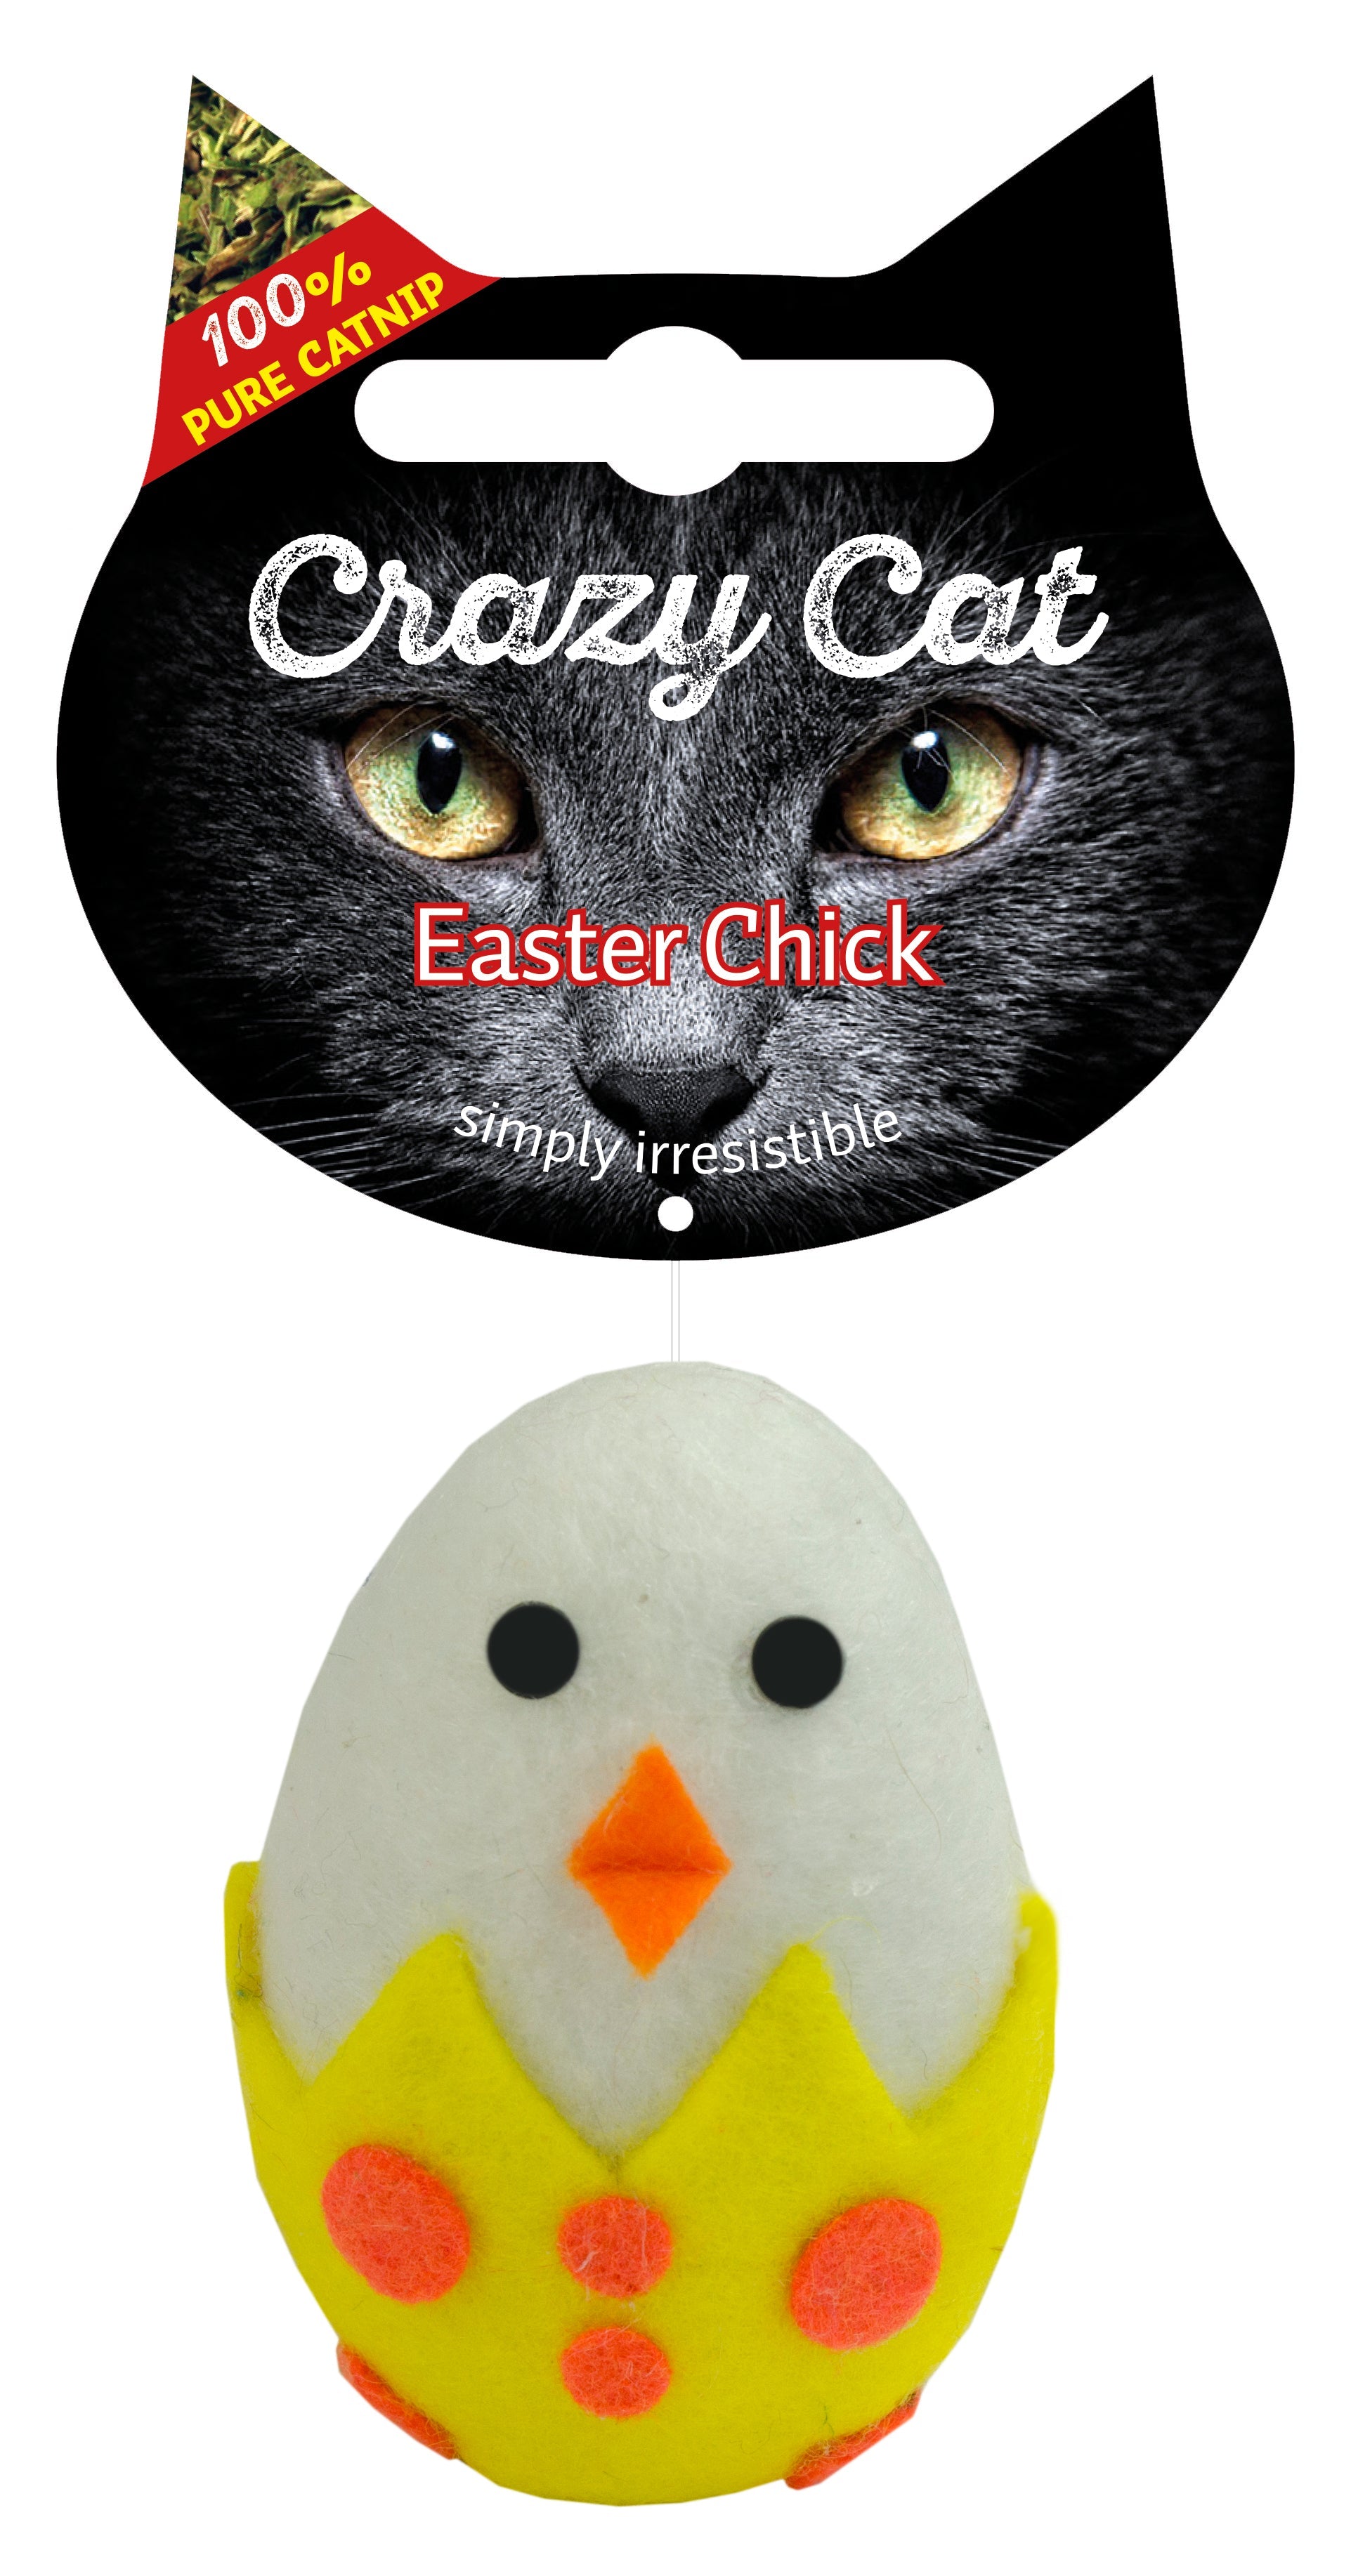 Crazy Cat Easter Chick vol met Madnip